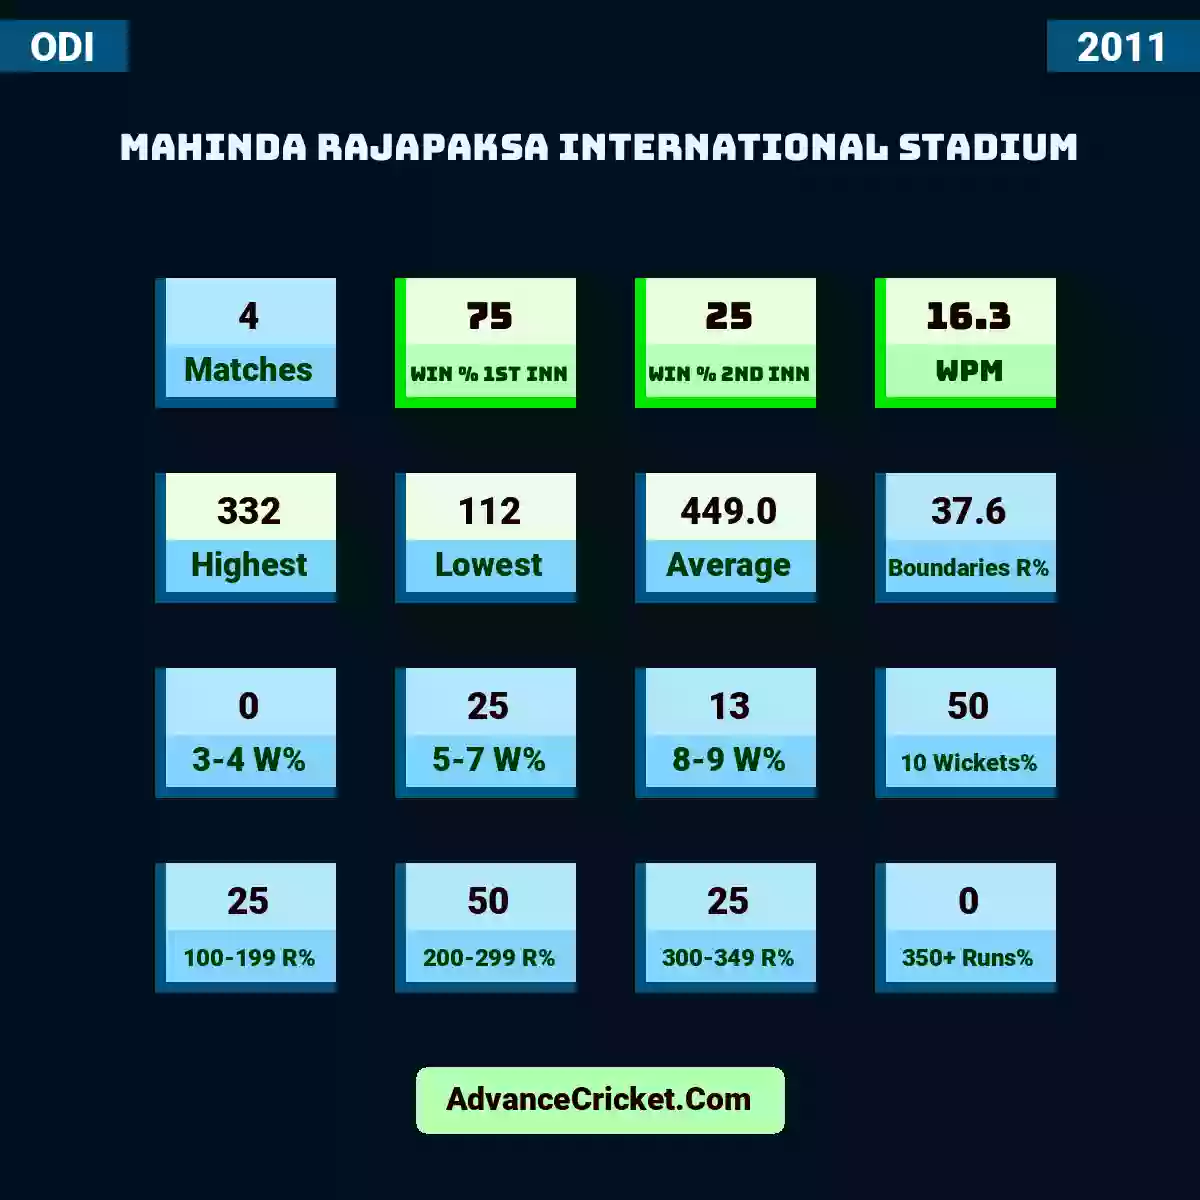 Image showing Mahinda Rajapaksa International Stadium with Matches: 4, Win % 1st Inn: 75, Win % 2nd Inn: 25, WPM: 16.3, Highest: 332, Lowest: 112, Average: 449.0, Boundaries R%: 37.6, 3-4 W%: 0, 5-7 W%: 25, 8-9 W%: 13, 10 Wickets%: 50, 100-199 R%: 25, 200-299 R%: 50, 300-349 R%: 25, 350+ Runs%: 0.